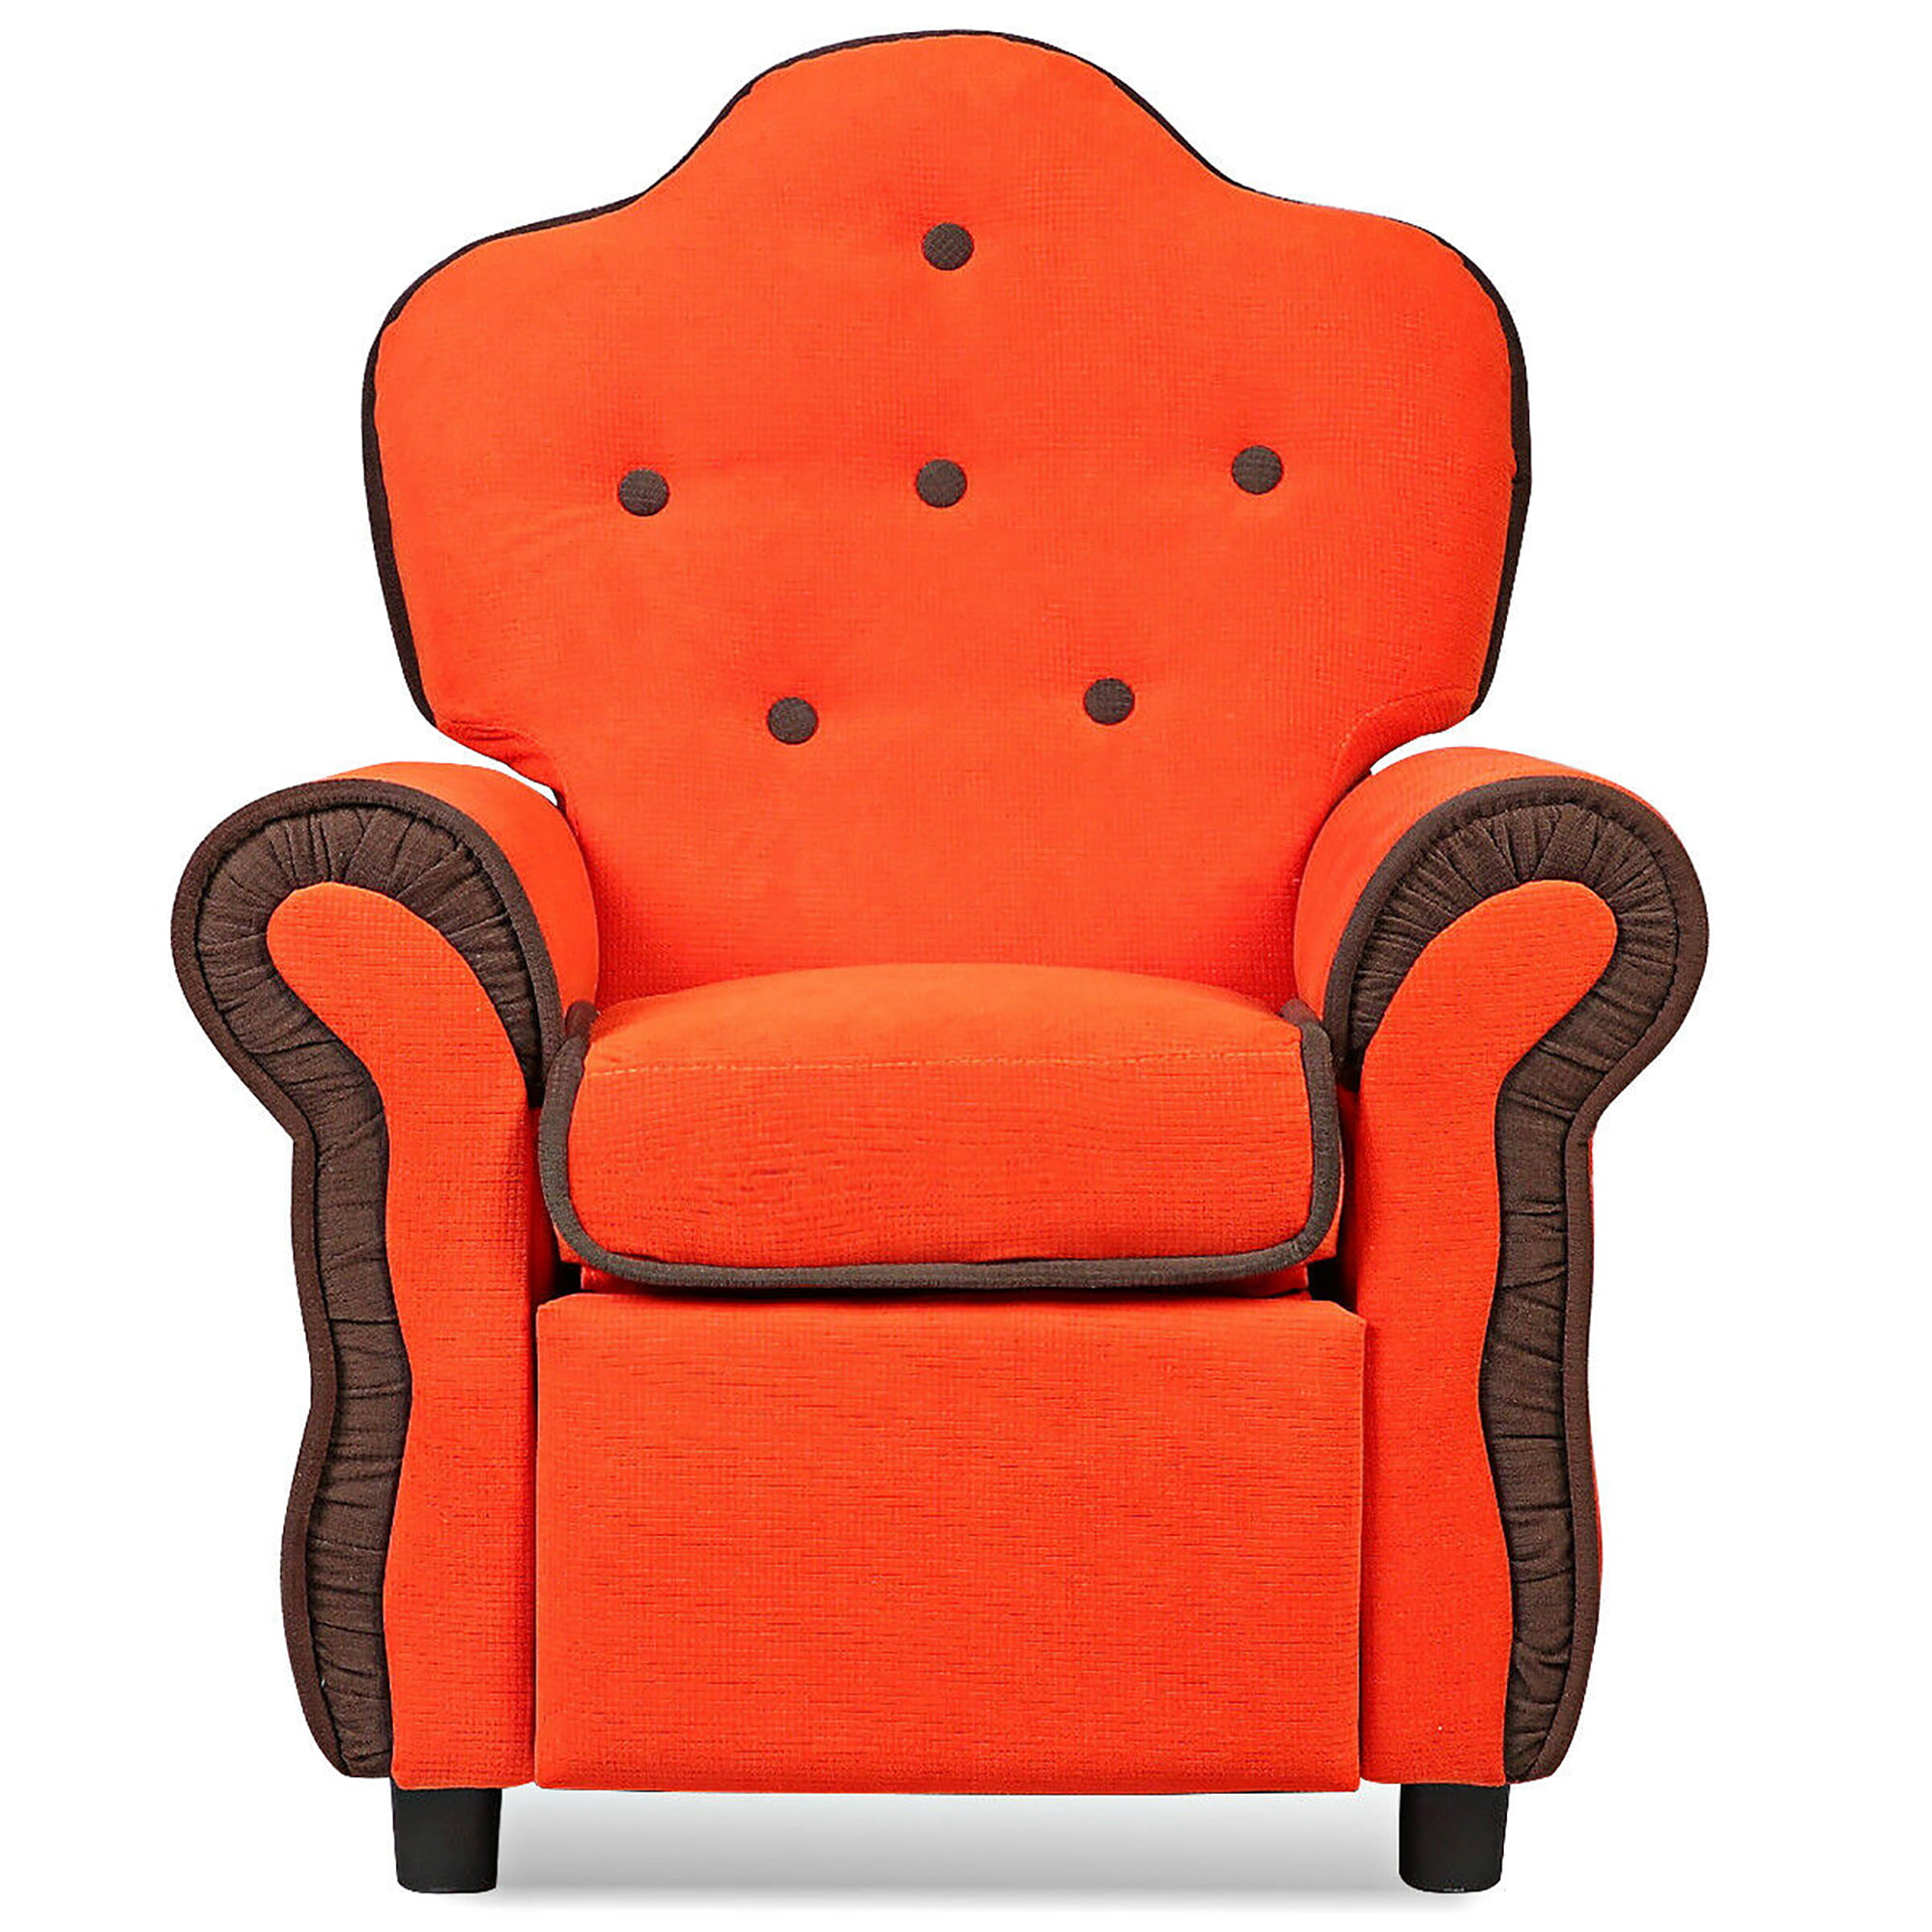 Goplus Comfortable Children Recliner Kids Sofa Chair Couch Orange